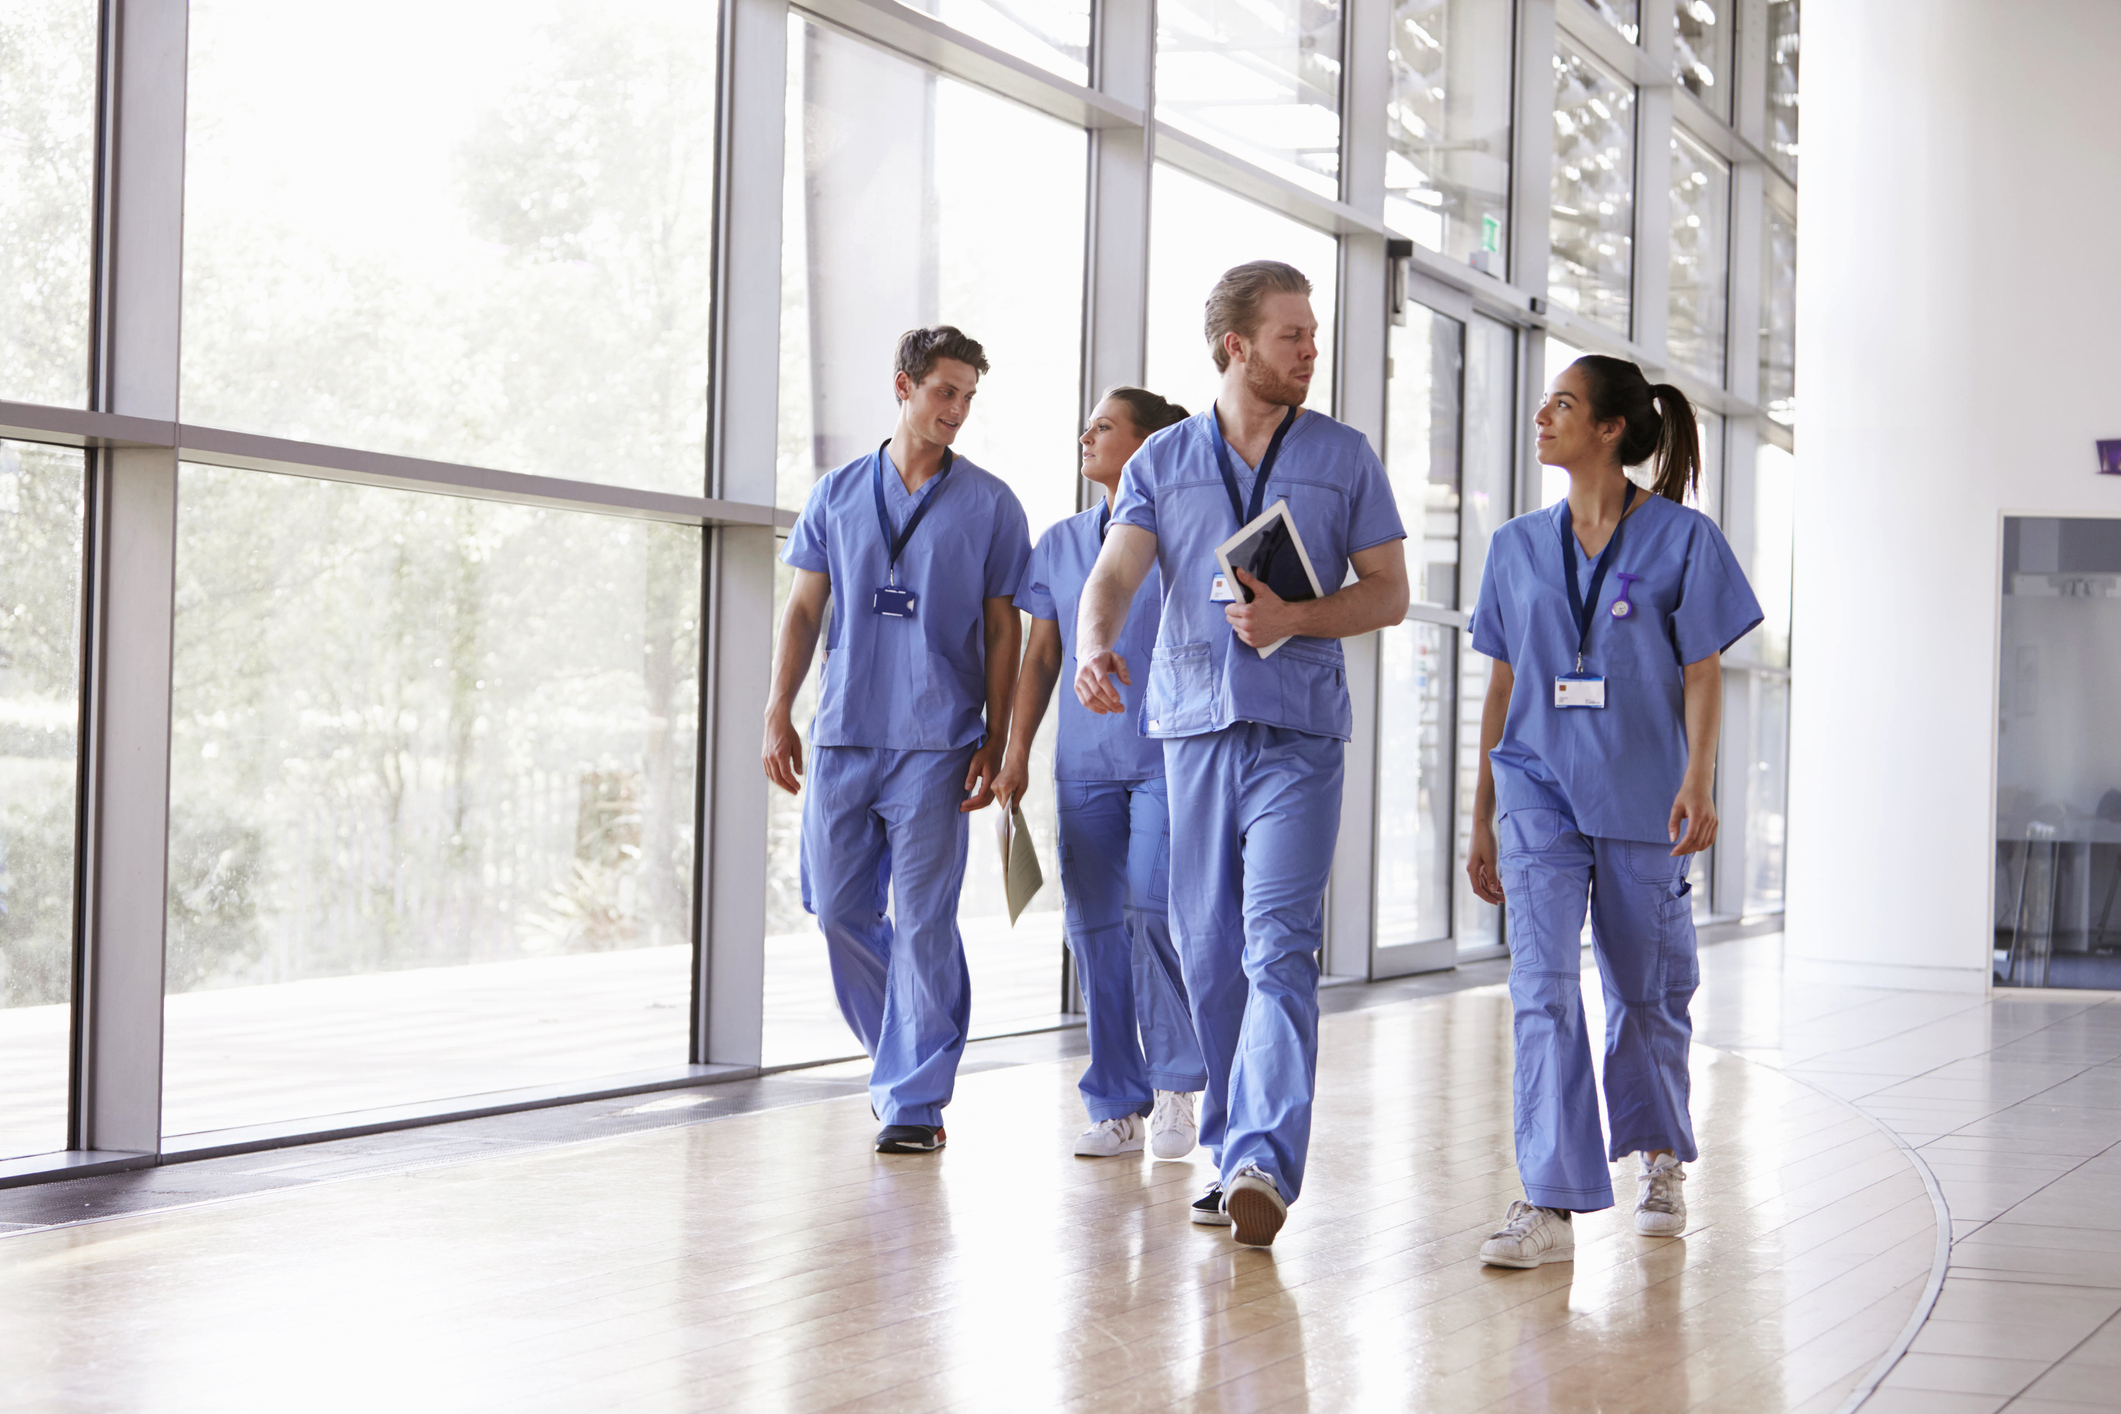 Group of Nurses walking down a hospital corridor discussing work